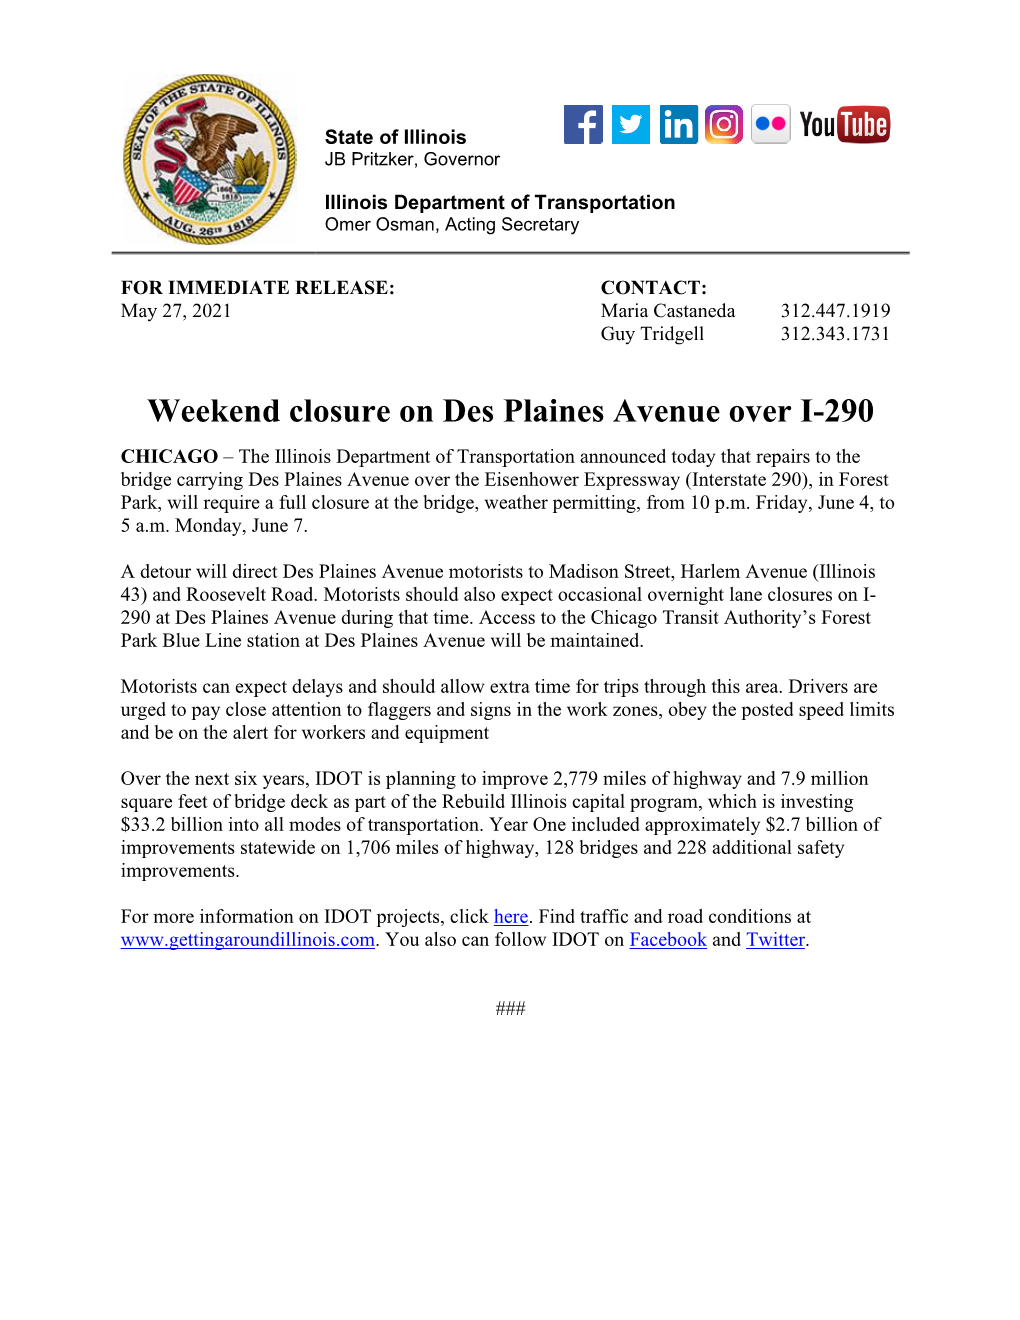 Weekend Closure on Des Plaines Avenue Over I-290